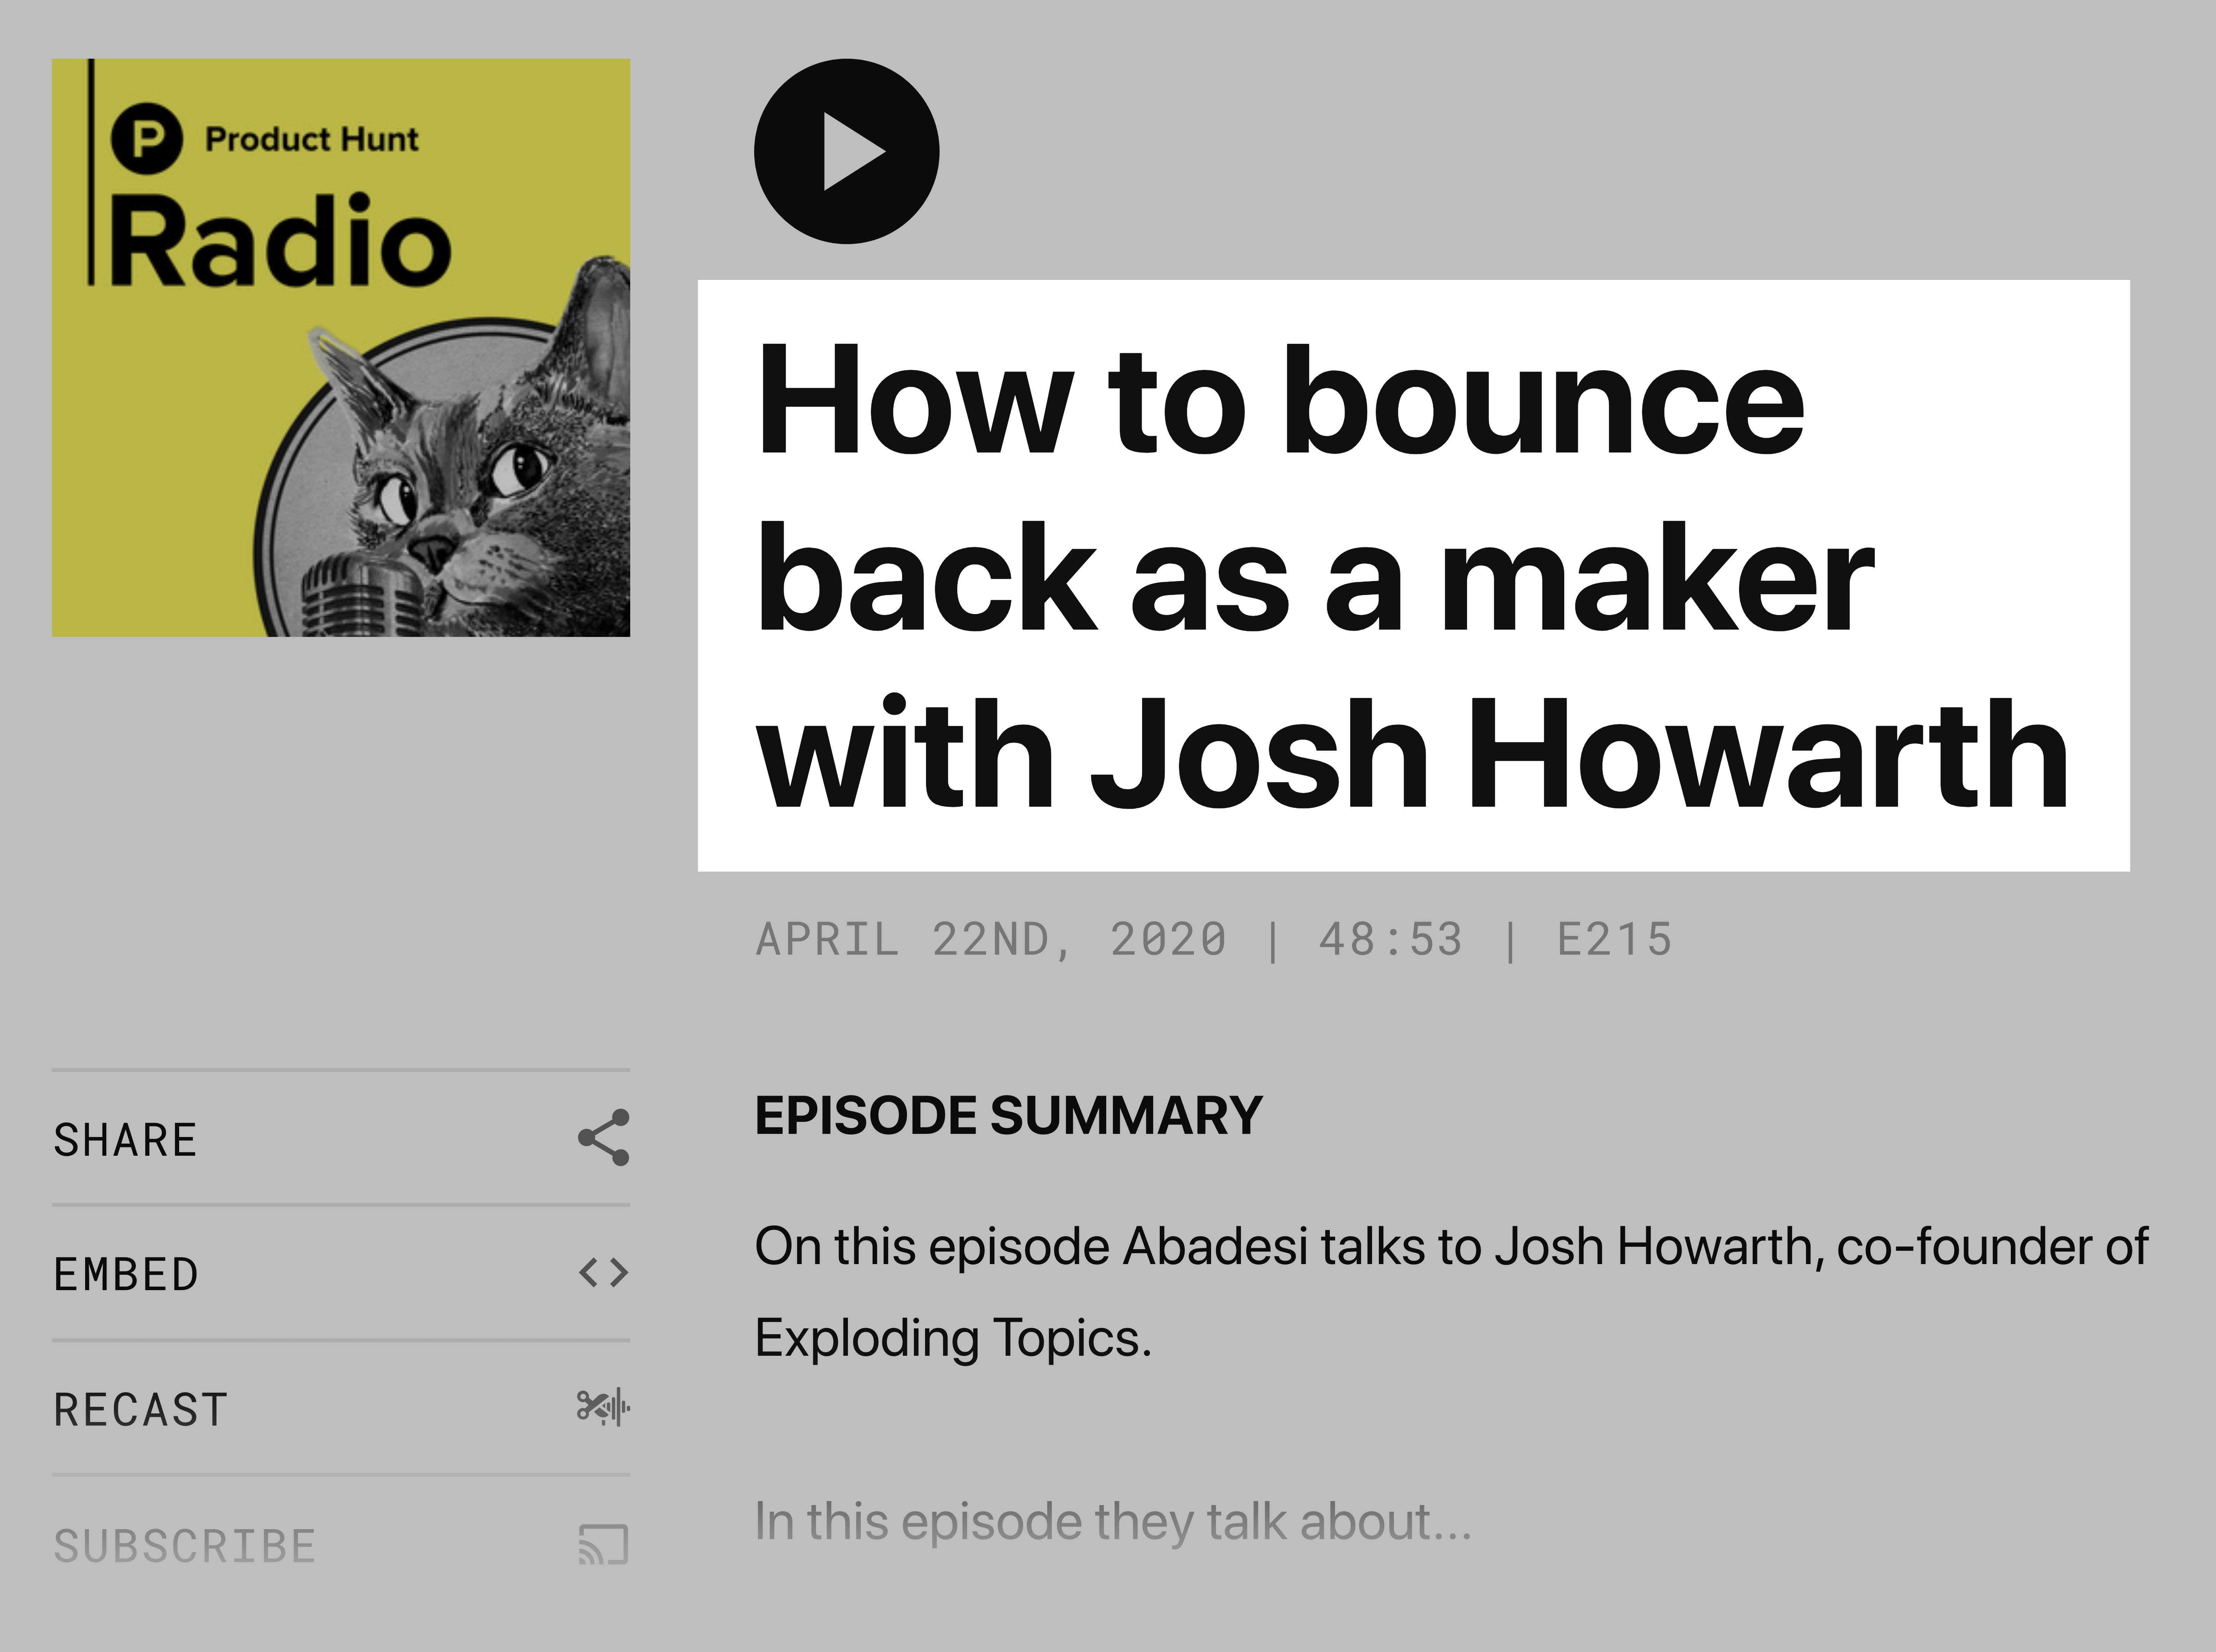 Josh on Product Hunt podcast